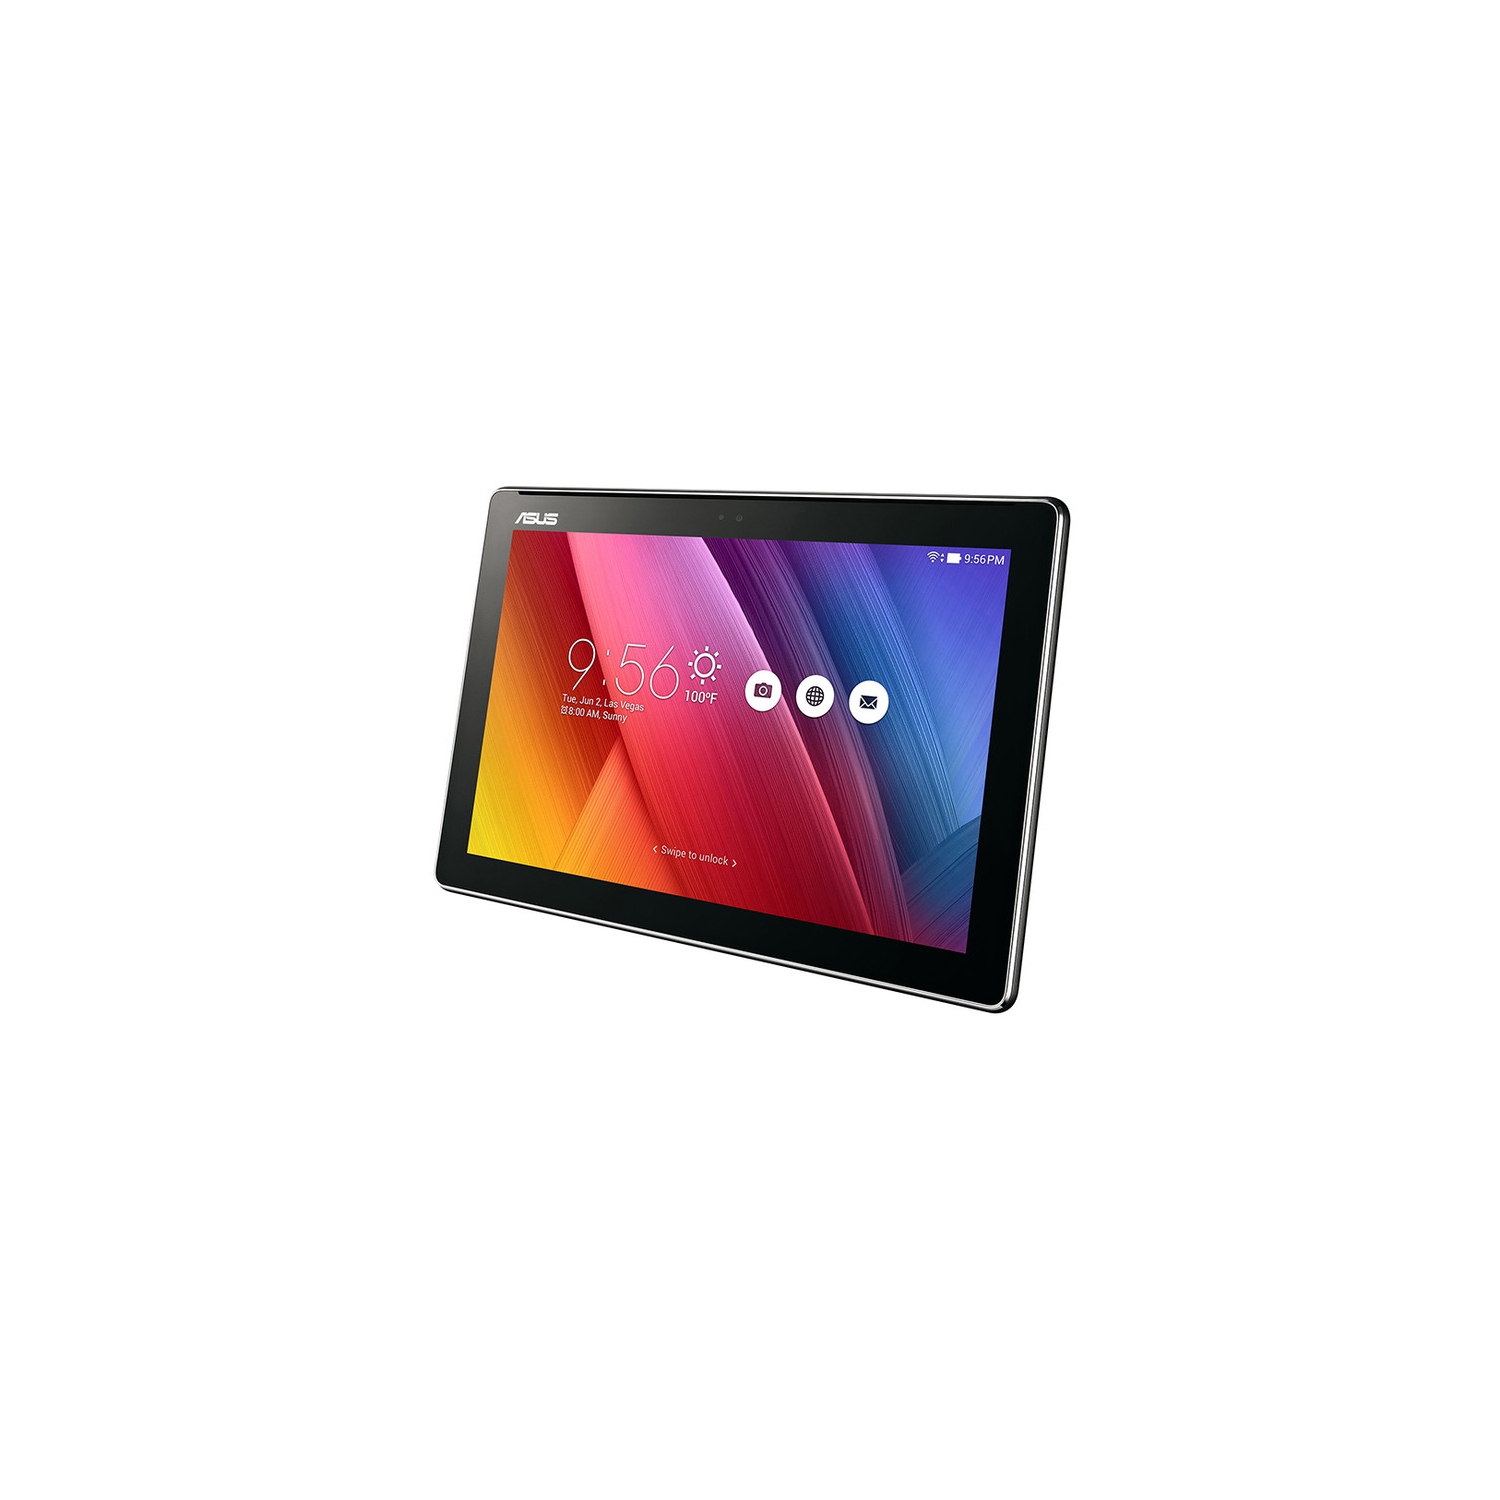 ASUS Zenpad 10 (Z300M) Tablet 16GB Dark Gray Open Box Unlocked